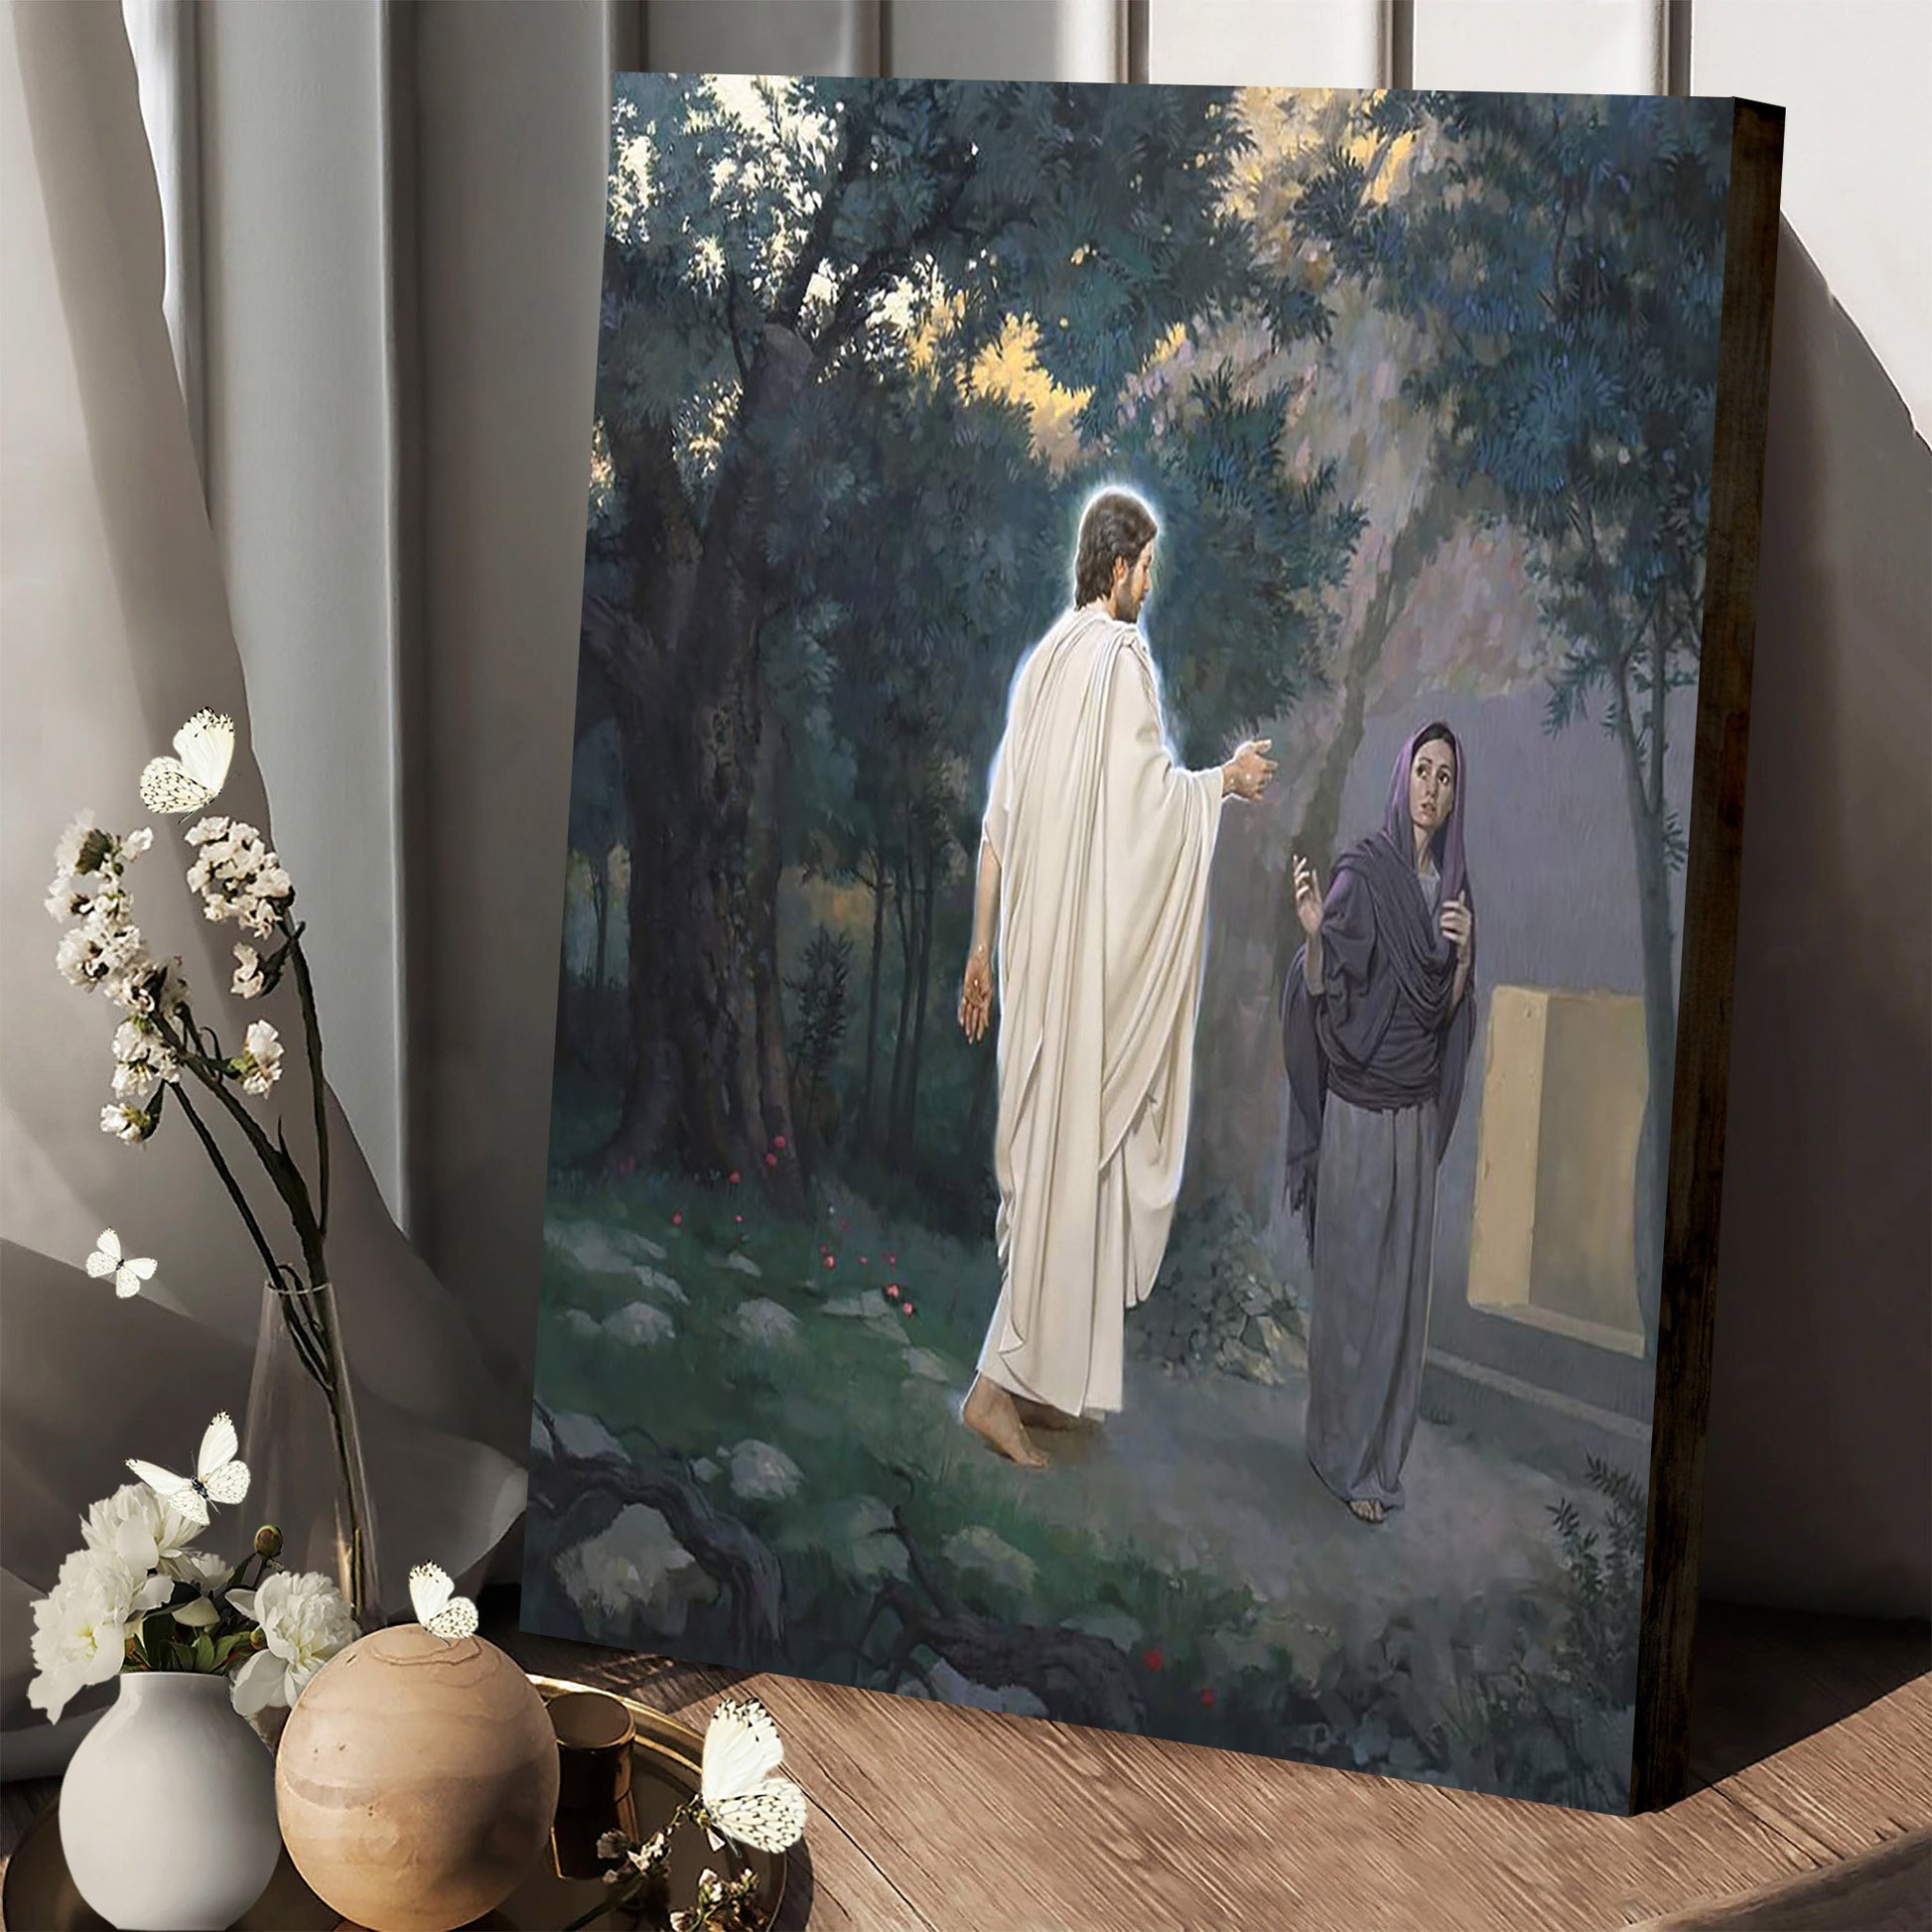 Resurrected Jesus - Canvas Pictures - Jesus Canvas Art - Christian Wall Art